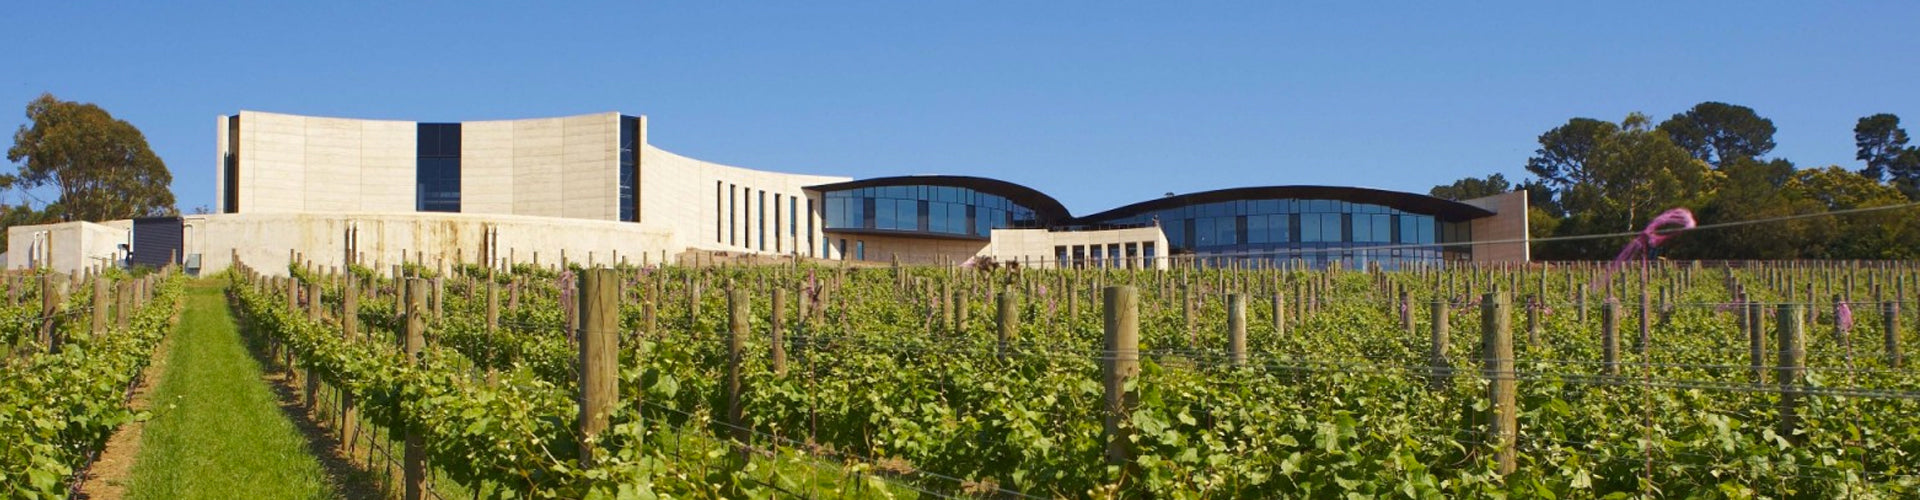 Port Phillip Wine Estate Winery in Mornington Peninsula